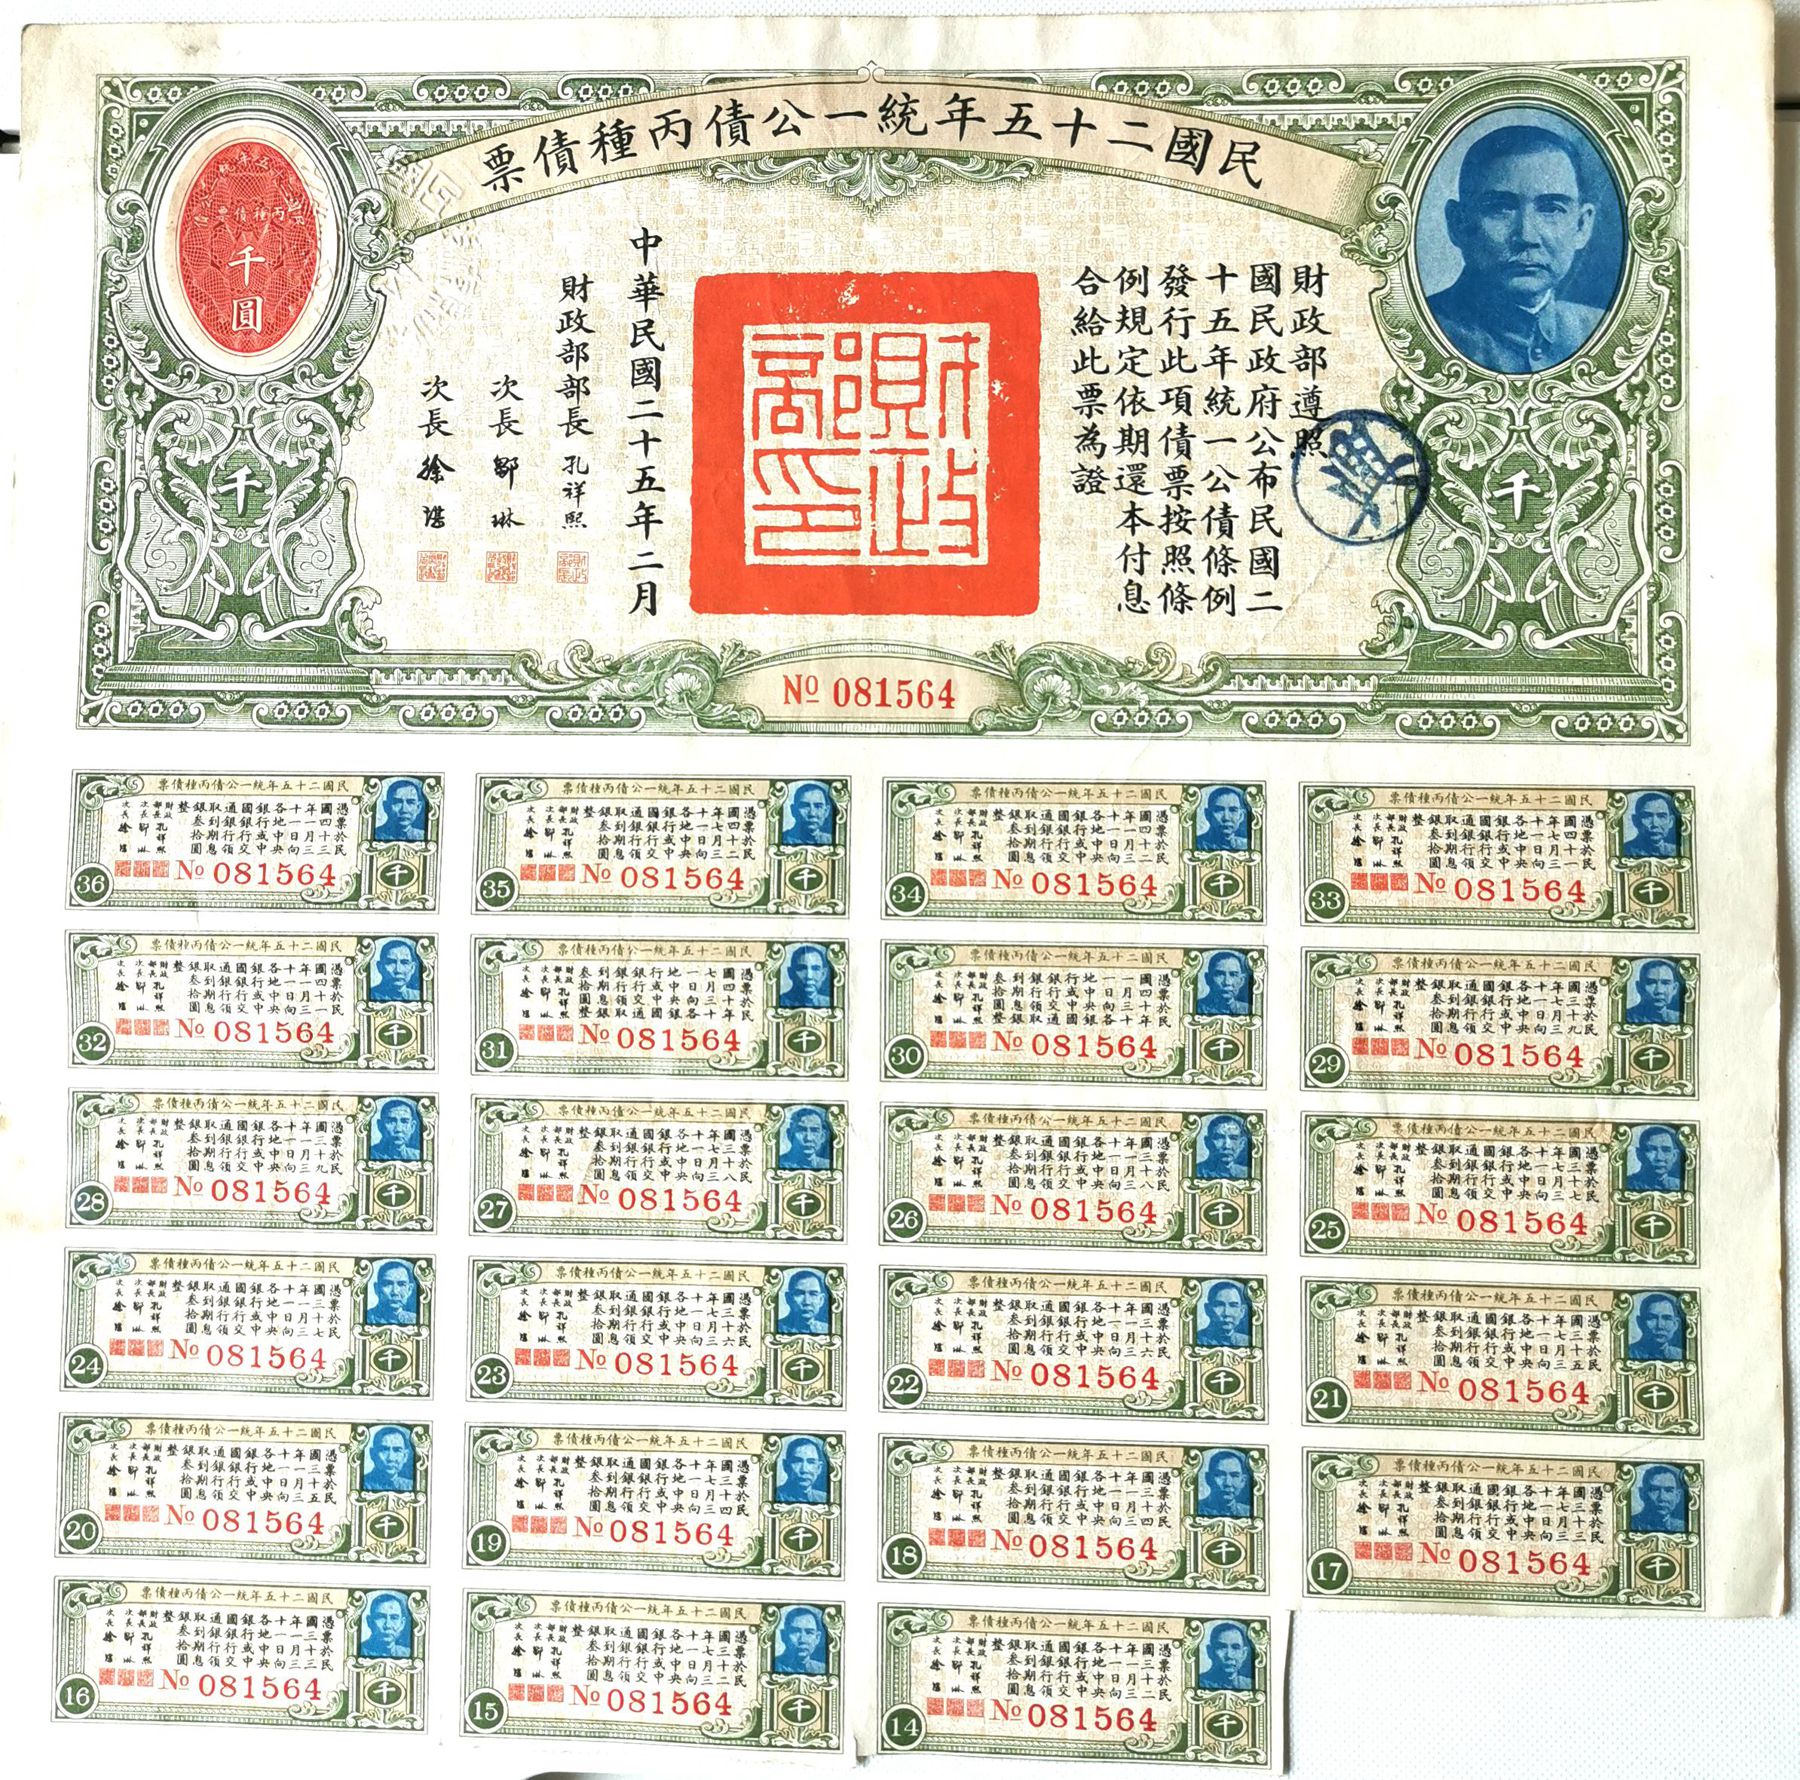 B2043, China 6% Unification Bond Type C, 1000 Dollars (High Value) 1936